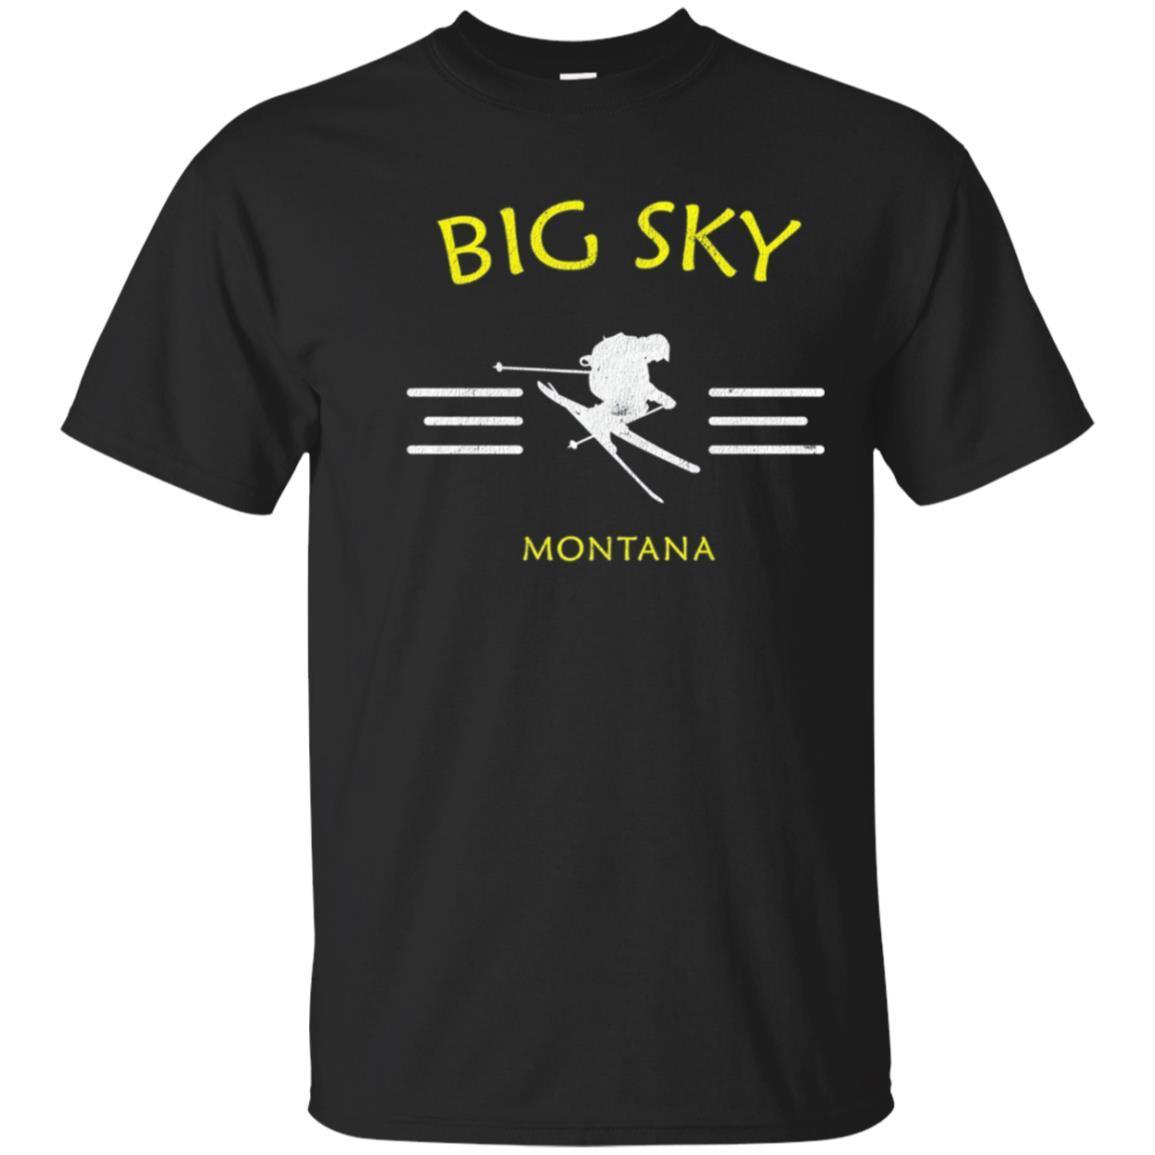 Big Sky Skiing T-shirt Montana Ski Tee